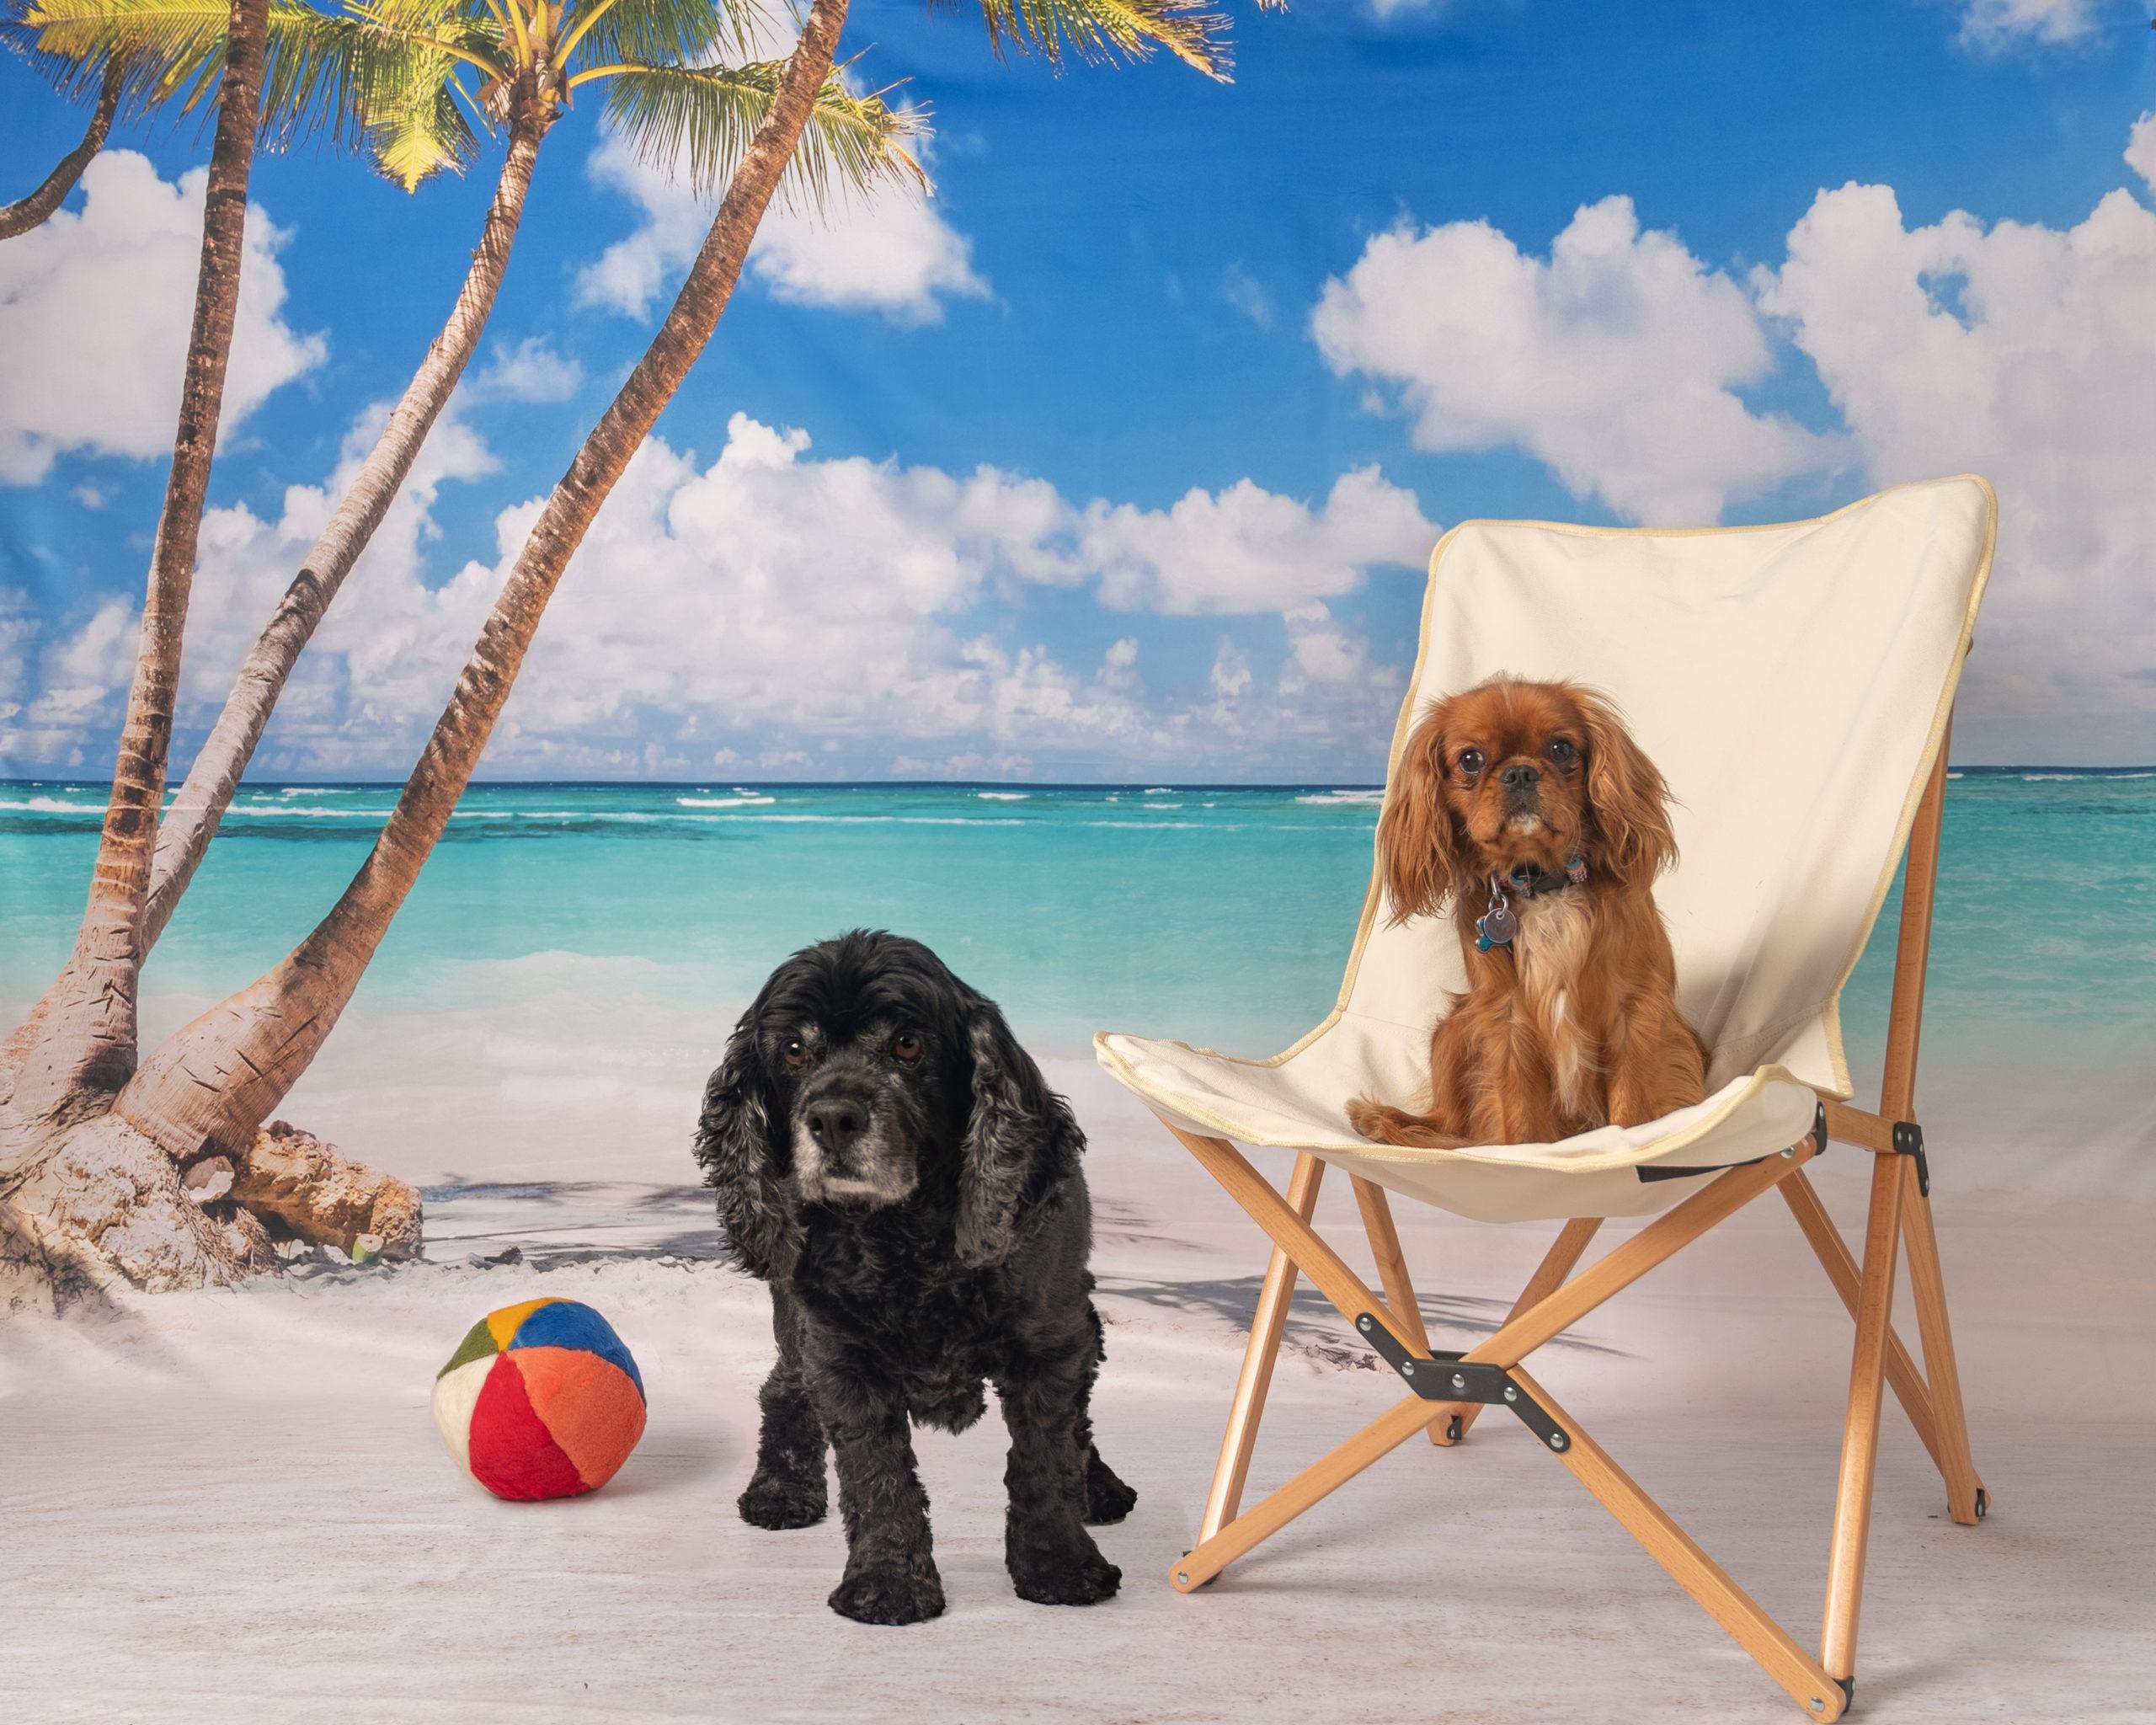 Two dogs in beach scene